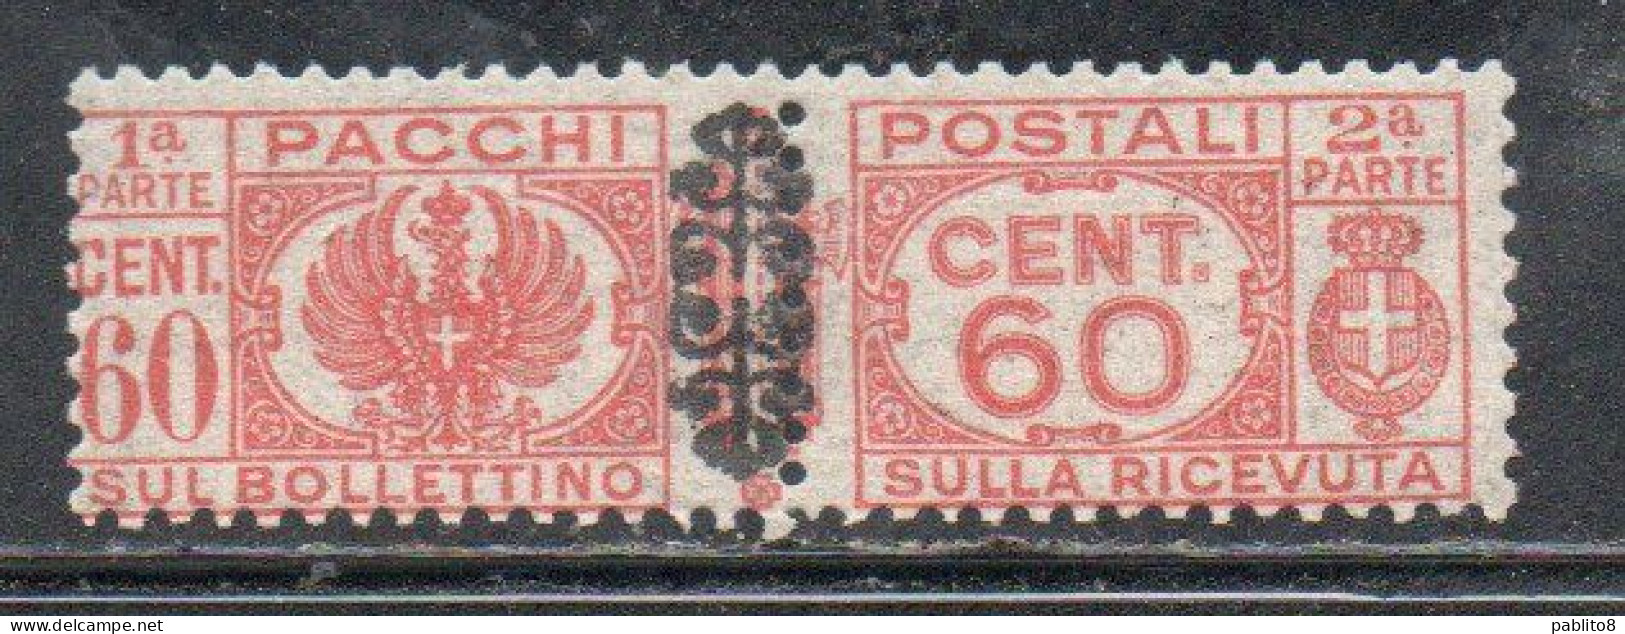 ITALIA REGNO ITALY KINGDOM 1945 LUOGOTENENZA PACCHI POSTALI PARCEL POST FREGIO CENT 60c MNH - Paketmarken